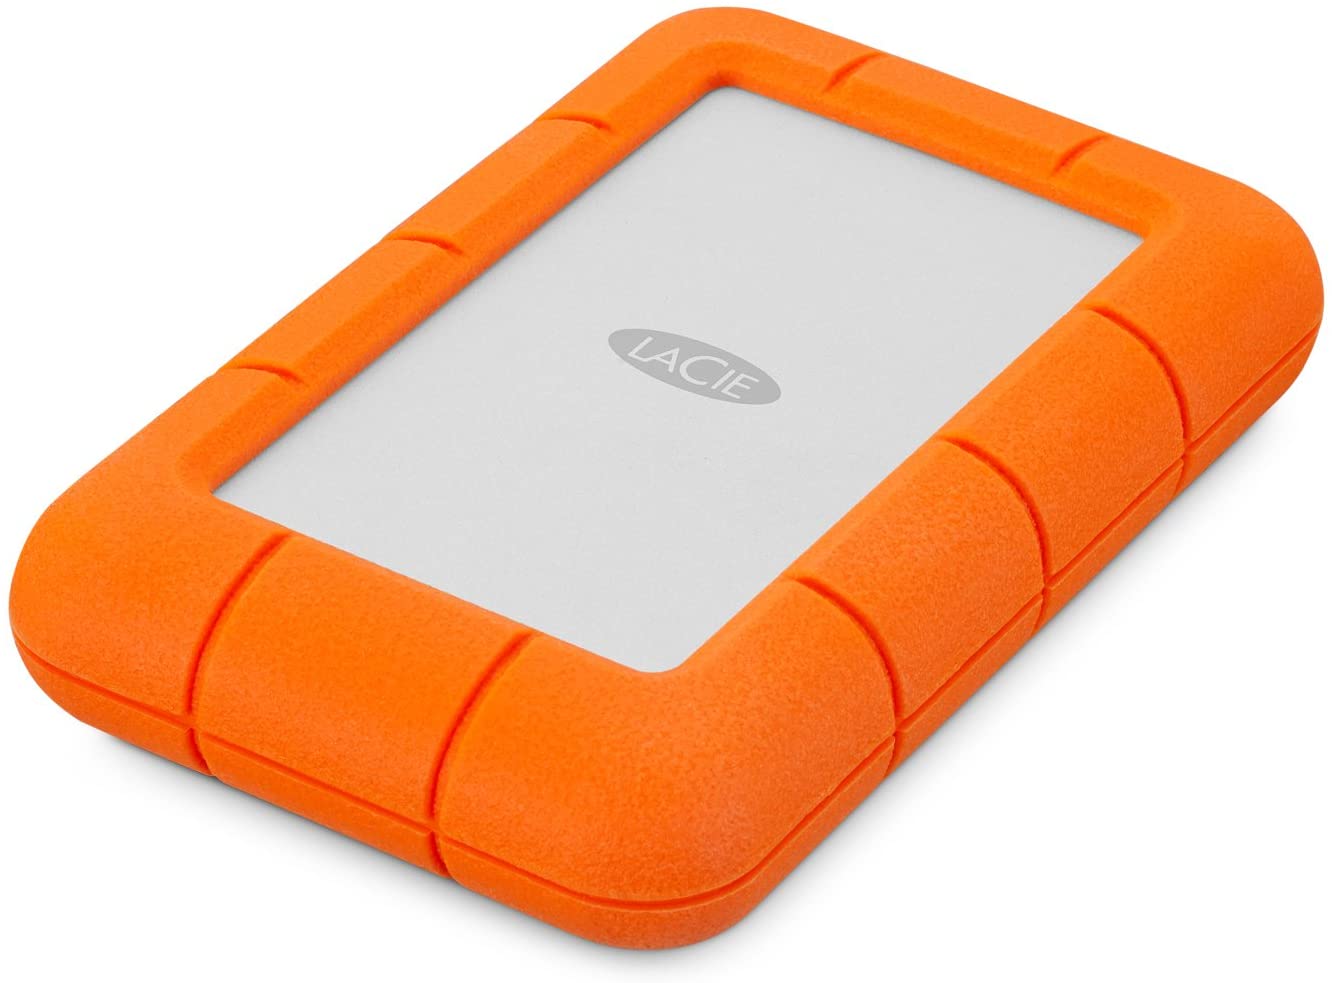 LaCie gaungaun Mini 4TB Ita Lile Drive Portable HDD